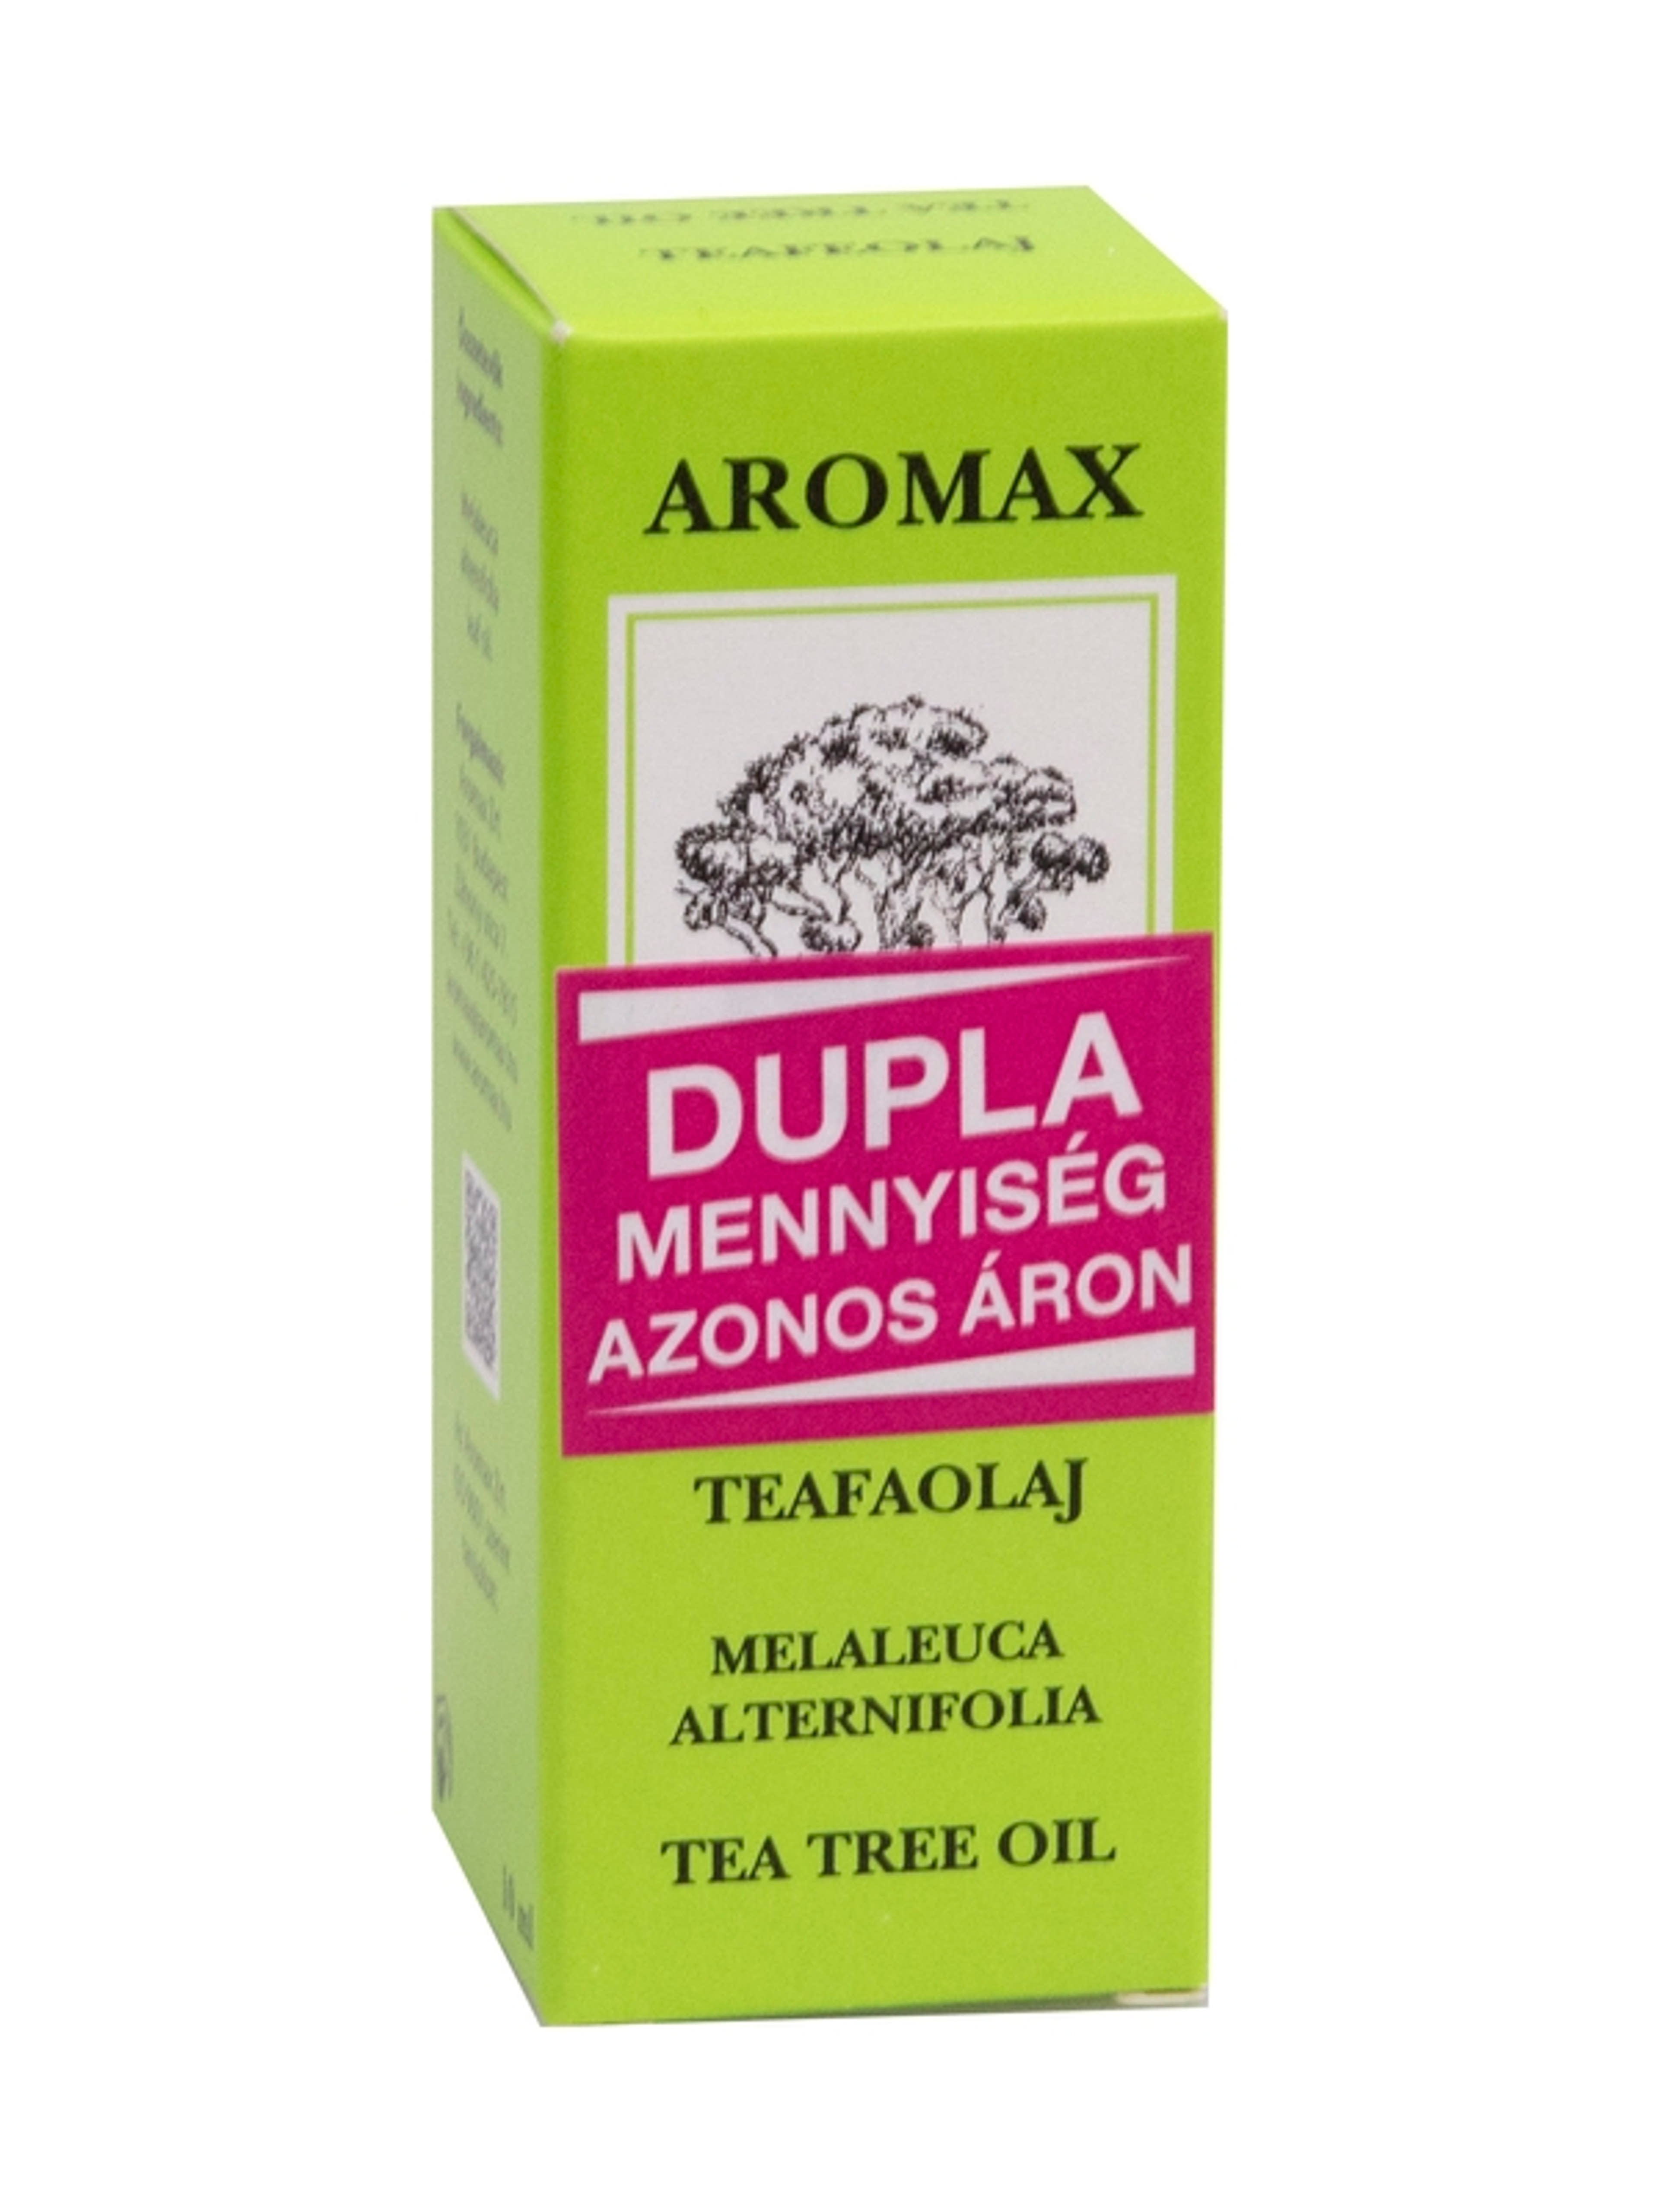 Aromax teafaolaj - 10 ml-1